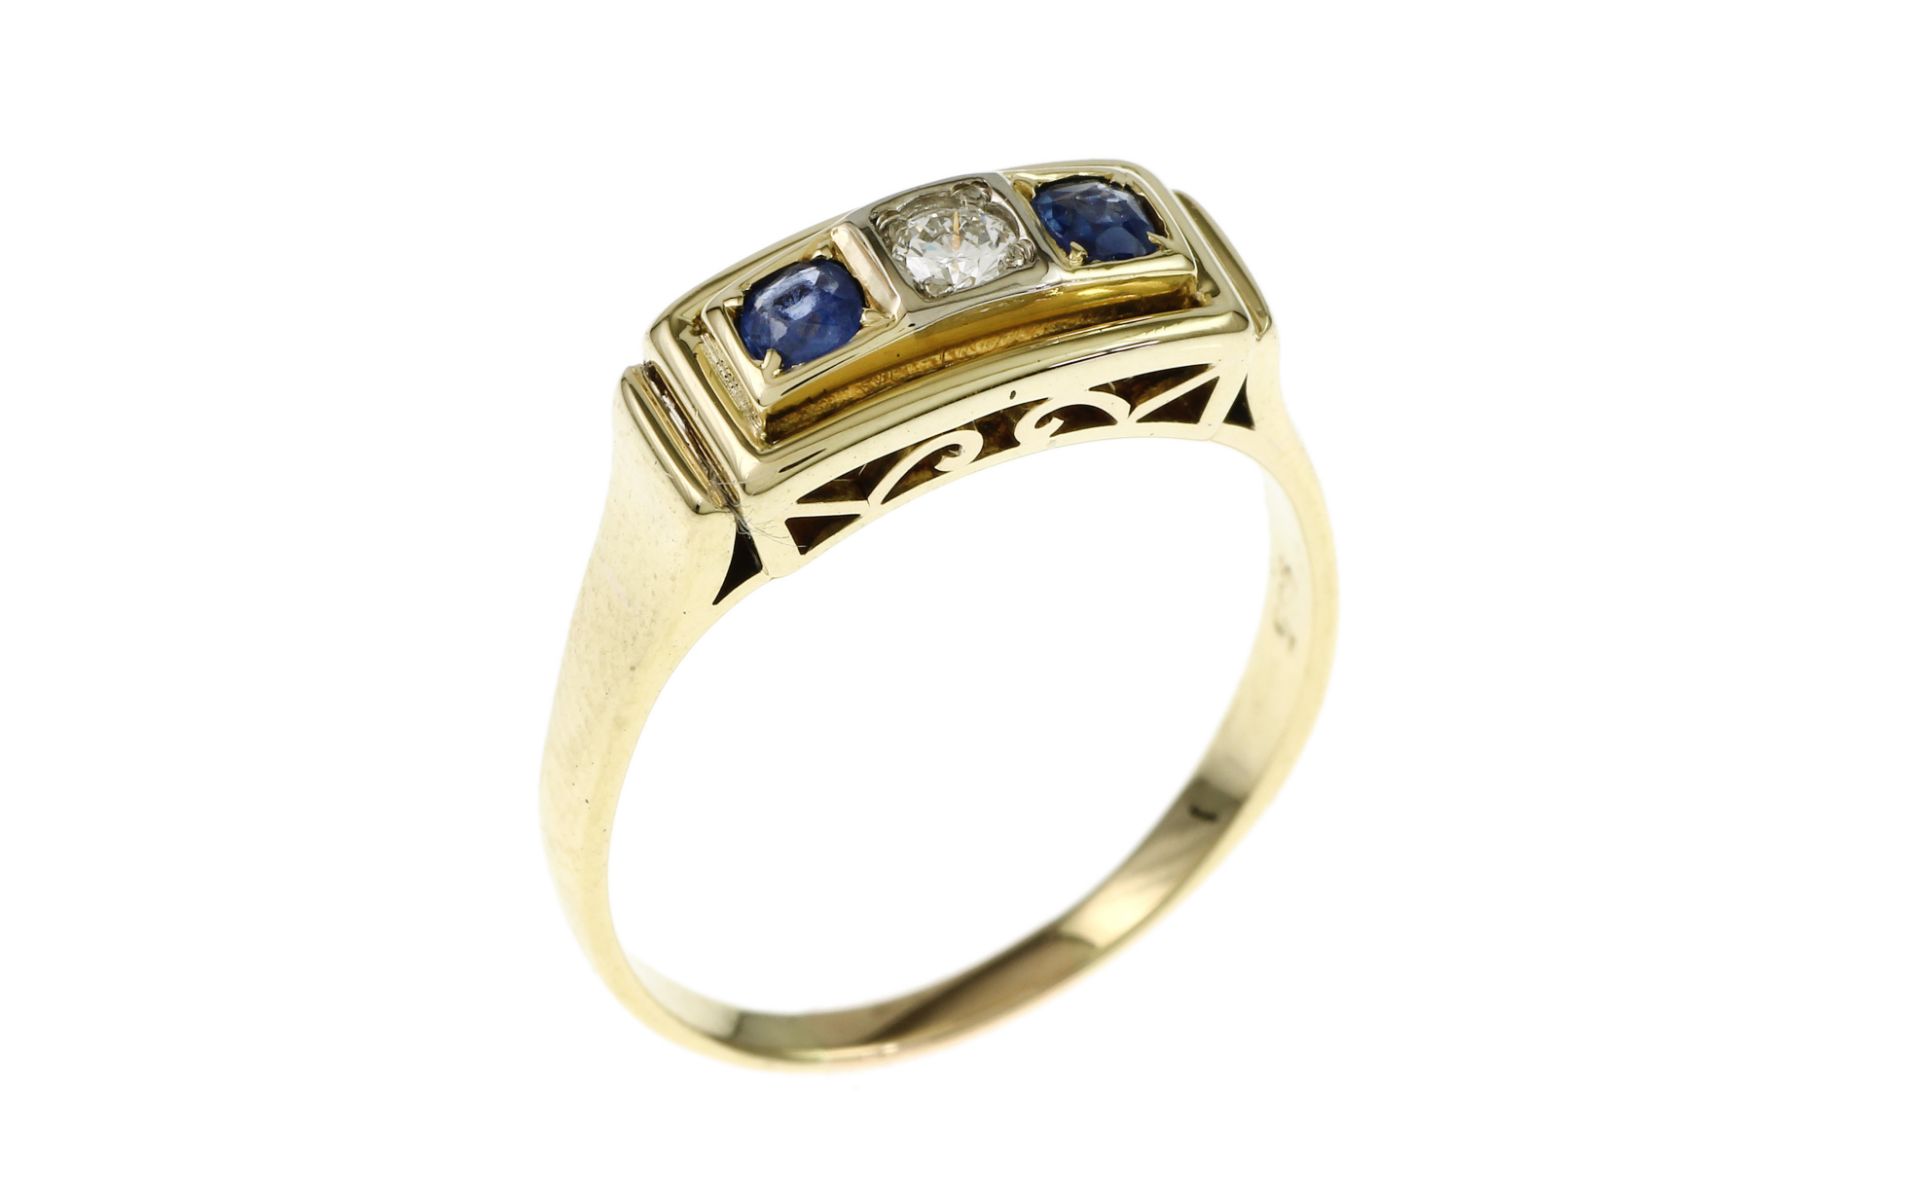 Ring 3.92g 585/- Gelbgold mit Diamant ca. 0.10 ct. H/si2 und Saphiren. Ringgroesse ca. 56